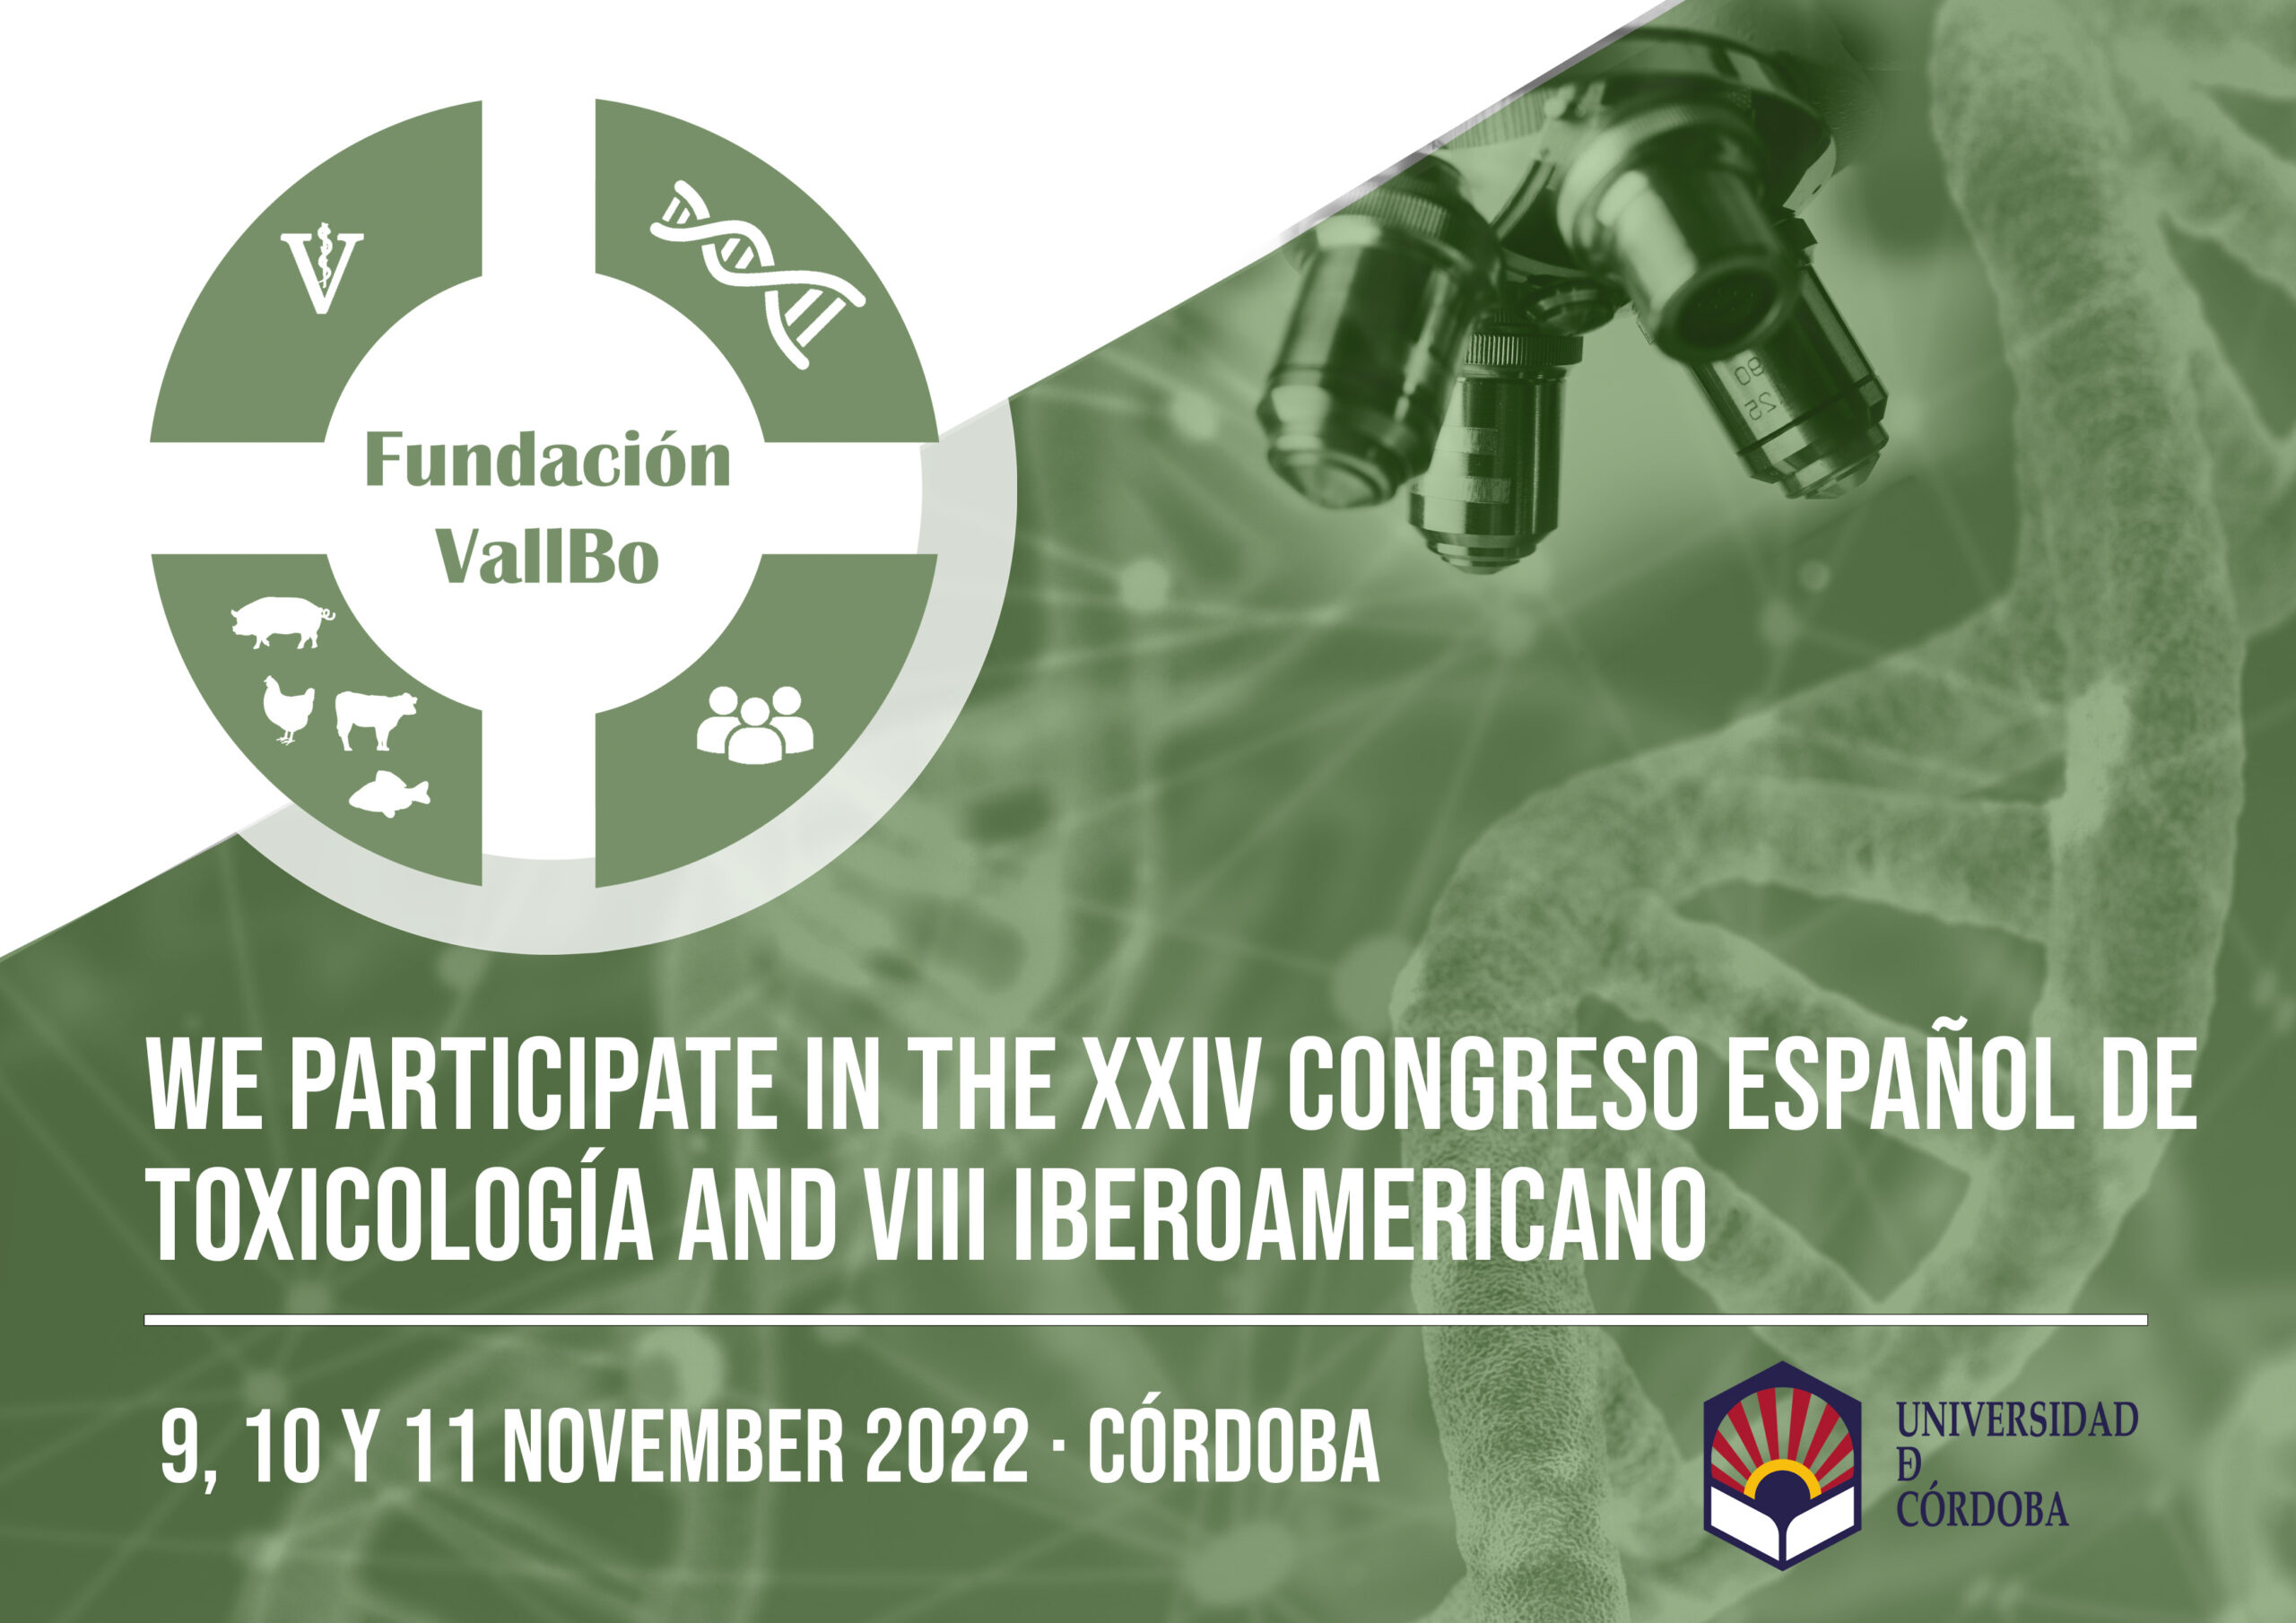 We participate in the XXIV Congreso Español de Toxicología and VIII Iberoamericano